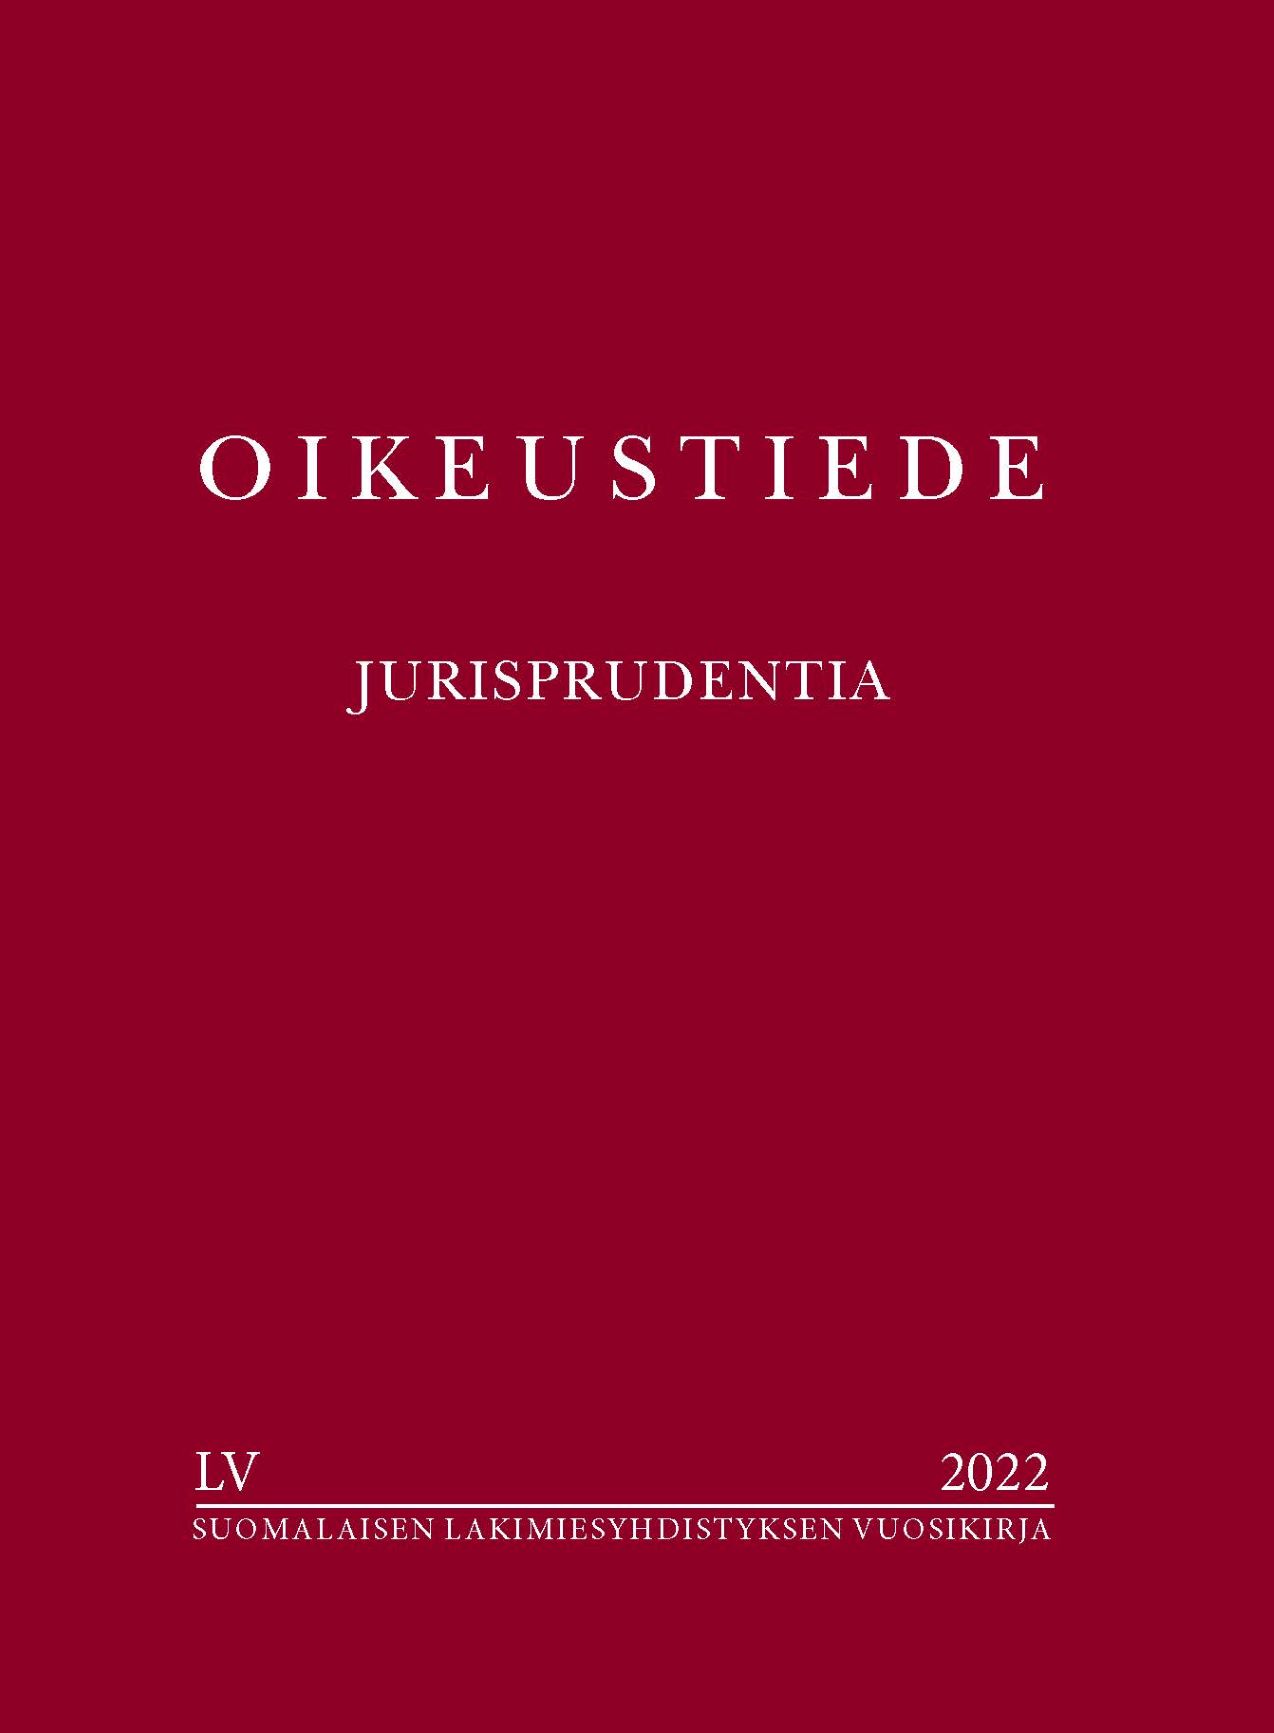 					Visa Vol 55 Nr LV (2022): Oikeustiede–Jurisprudentia-vuosikirja
				